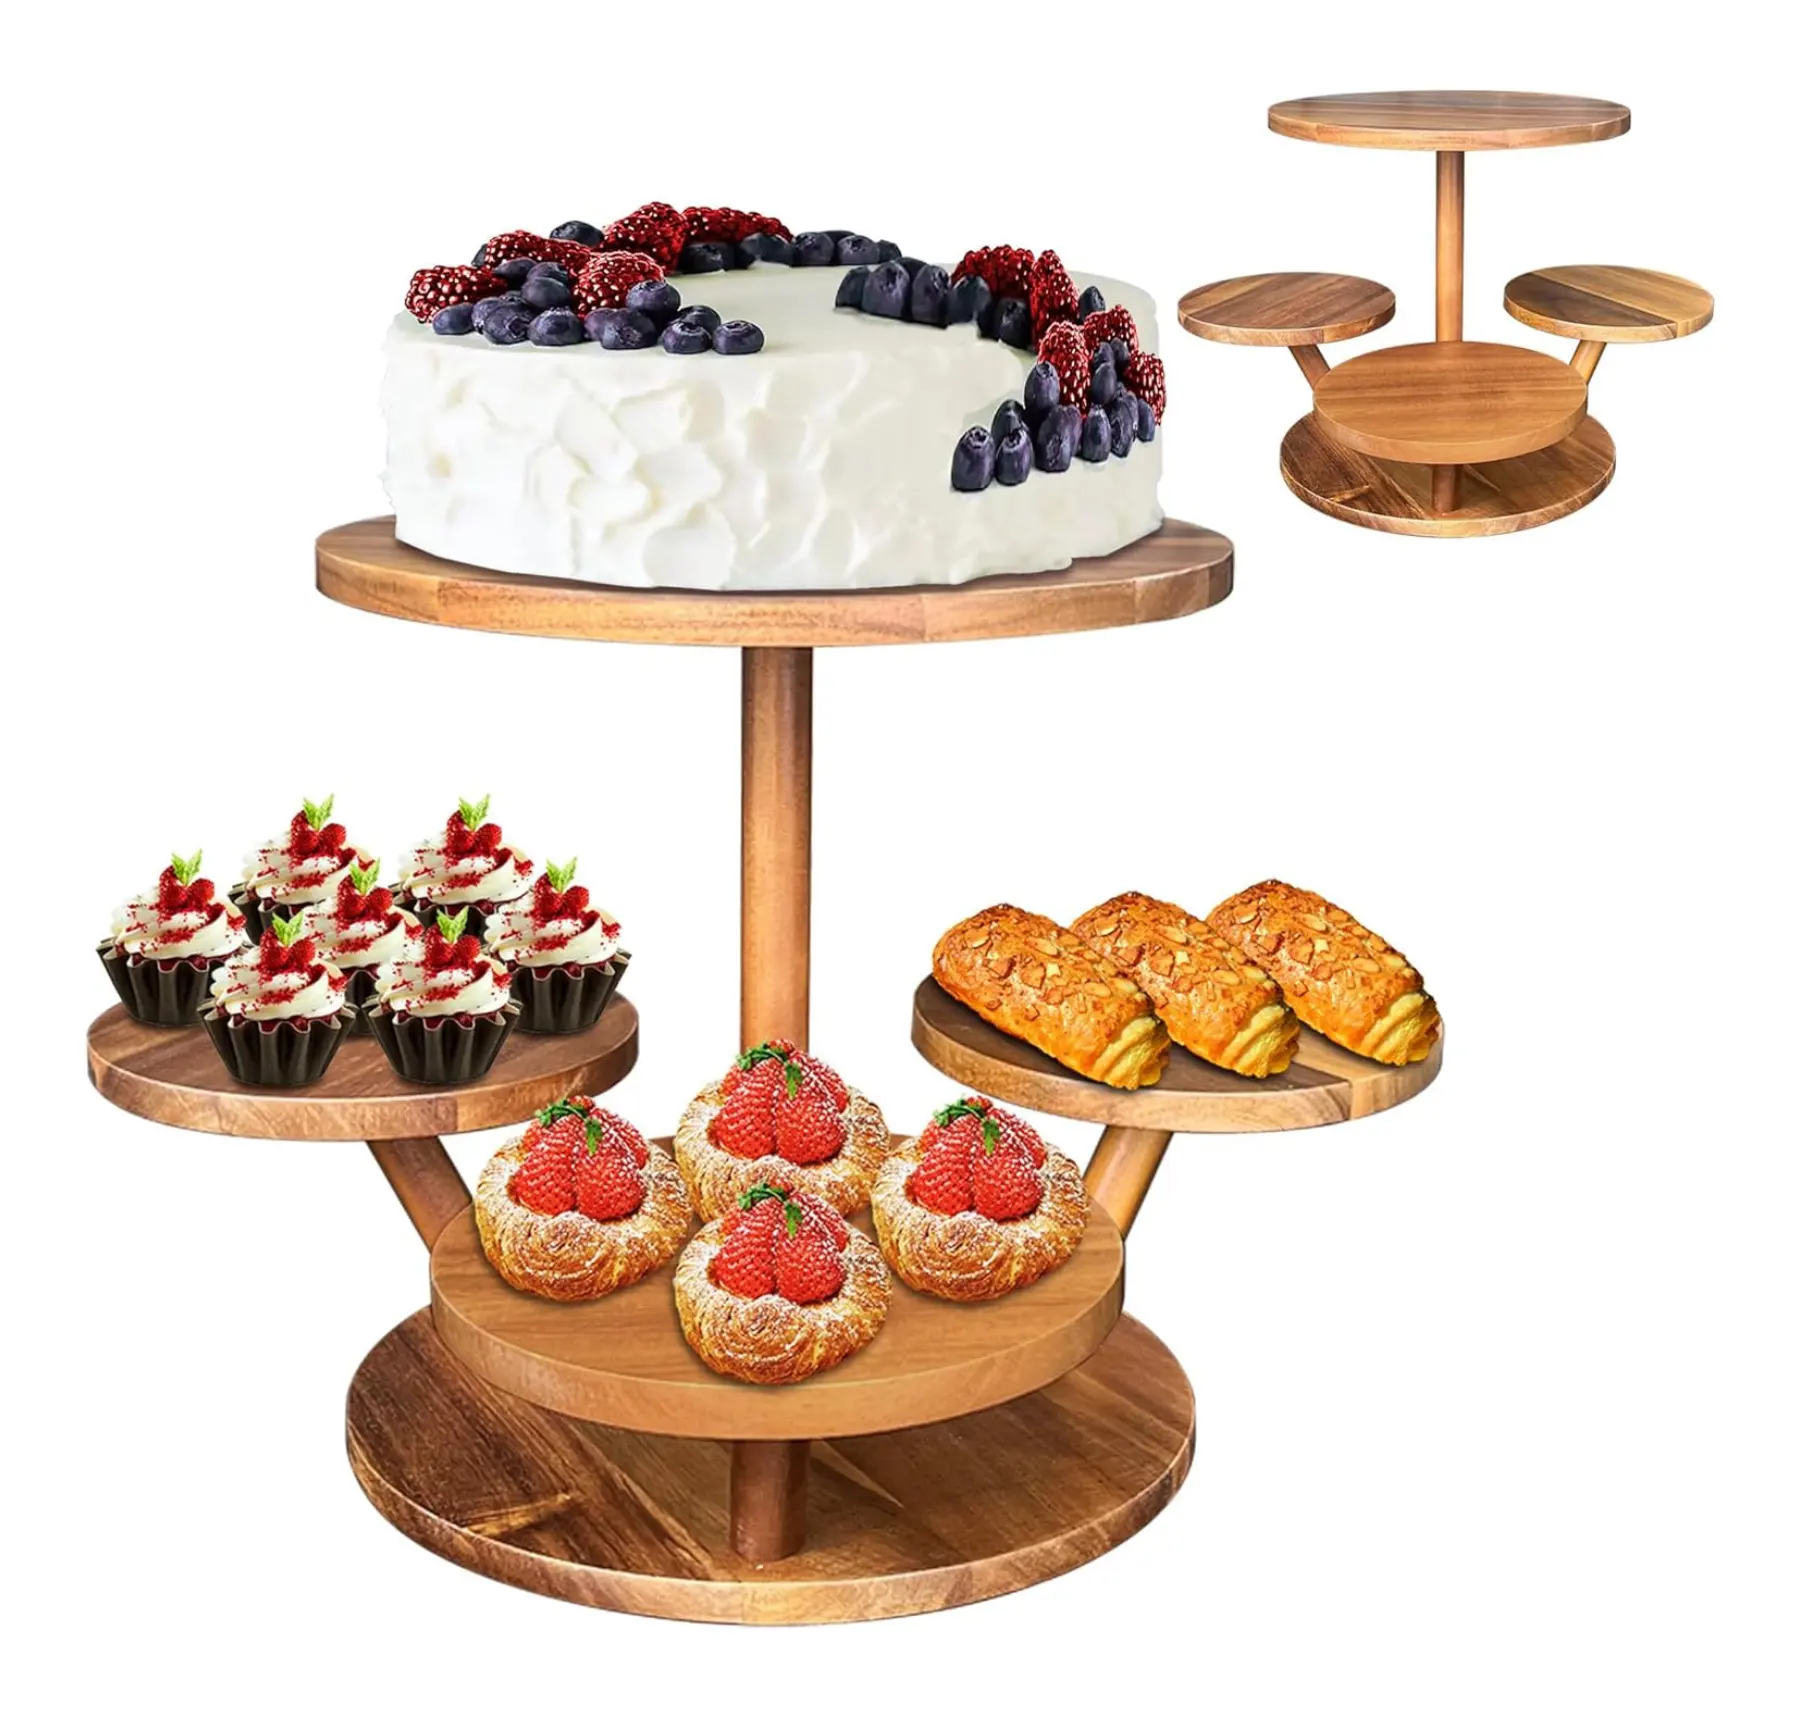 Soporte de torre para cupcakes de 4 niveles para 50 cupcakes soporte de madera para servir, soporte de exhibición de pasteles torre de postres, poste inclinado